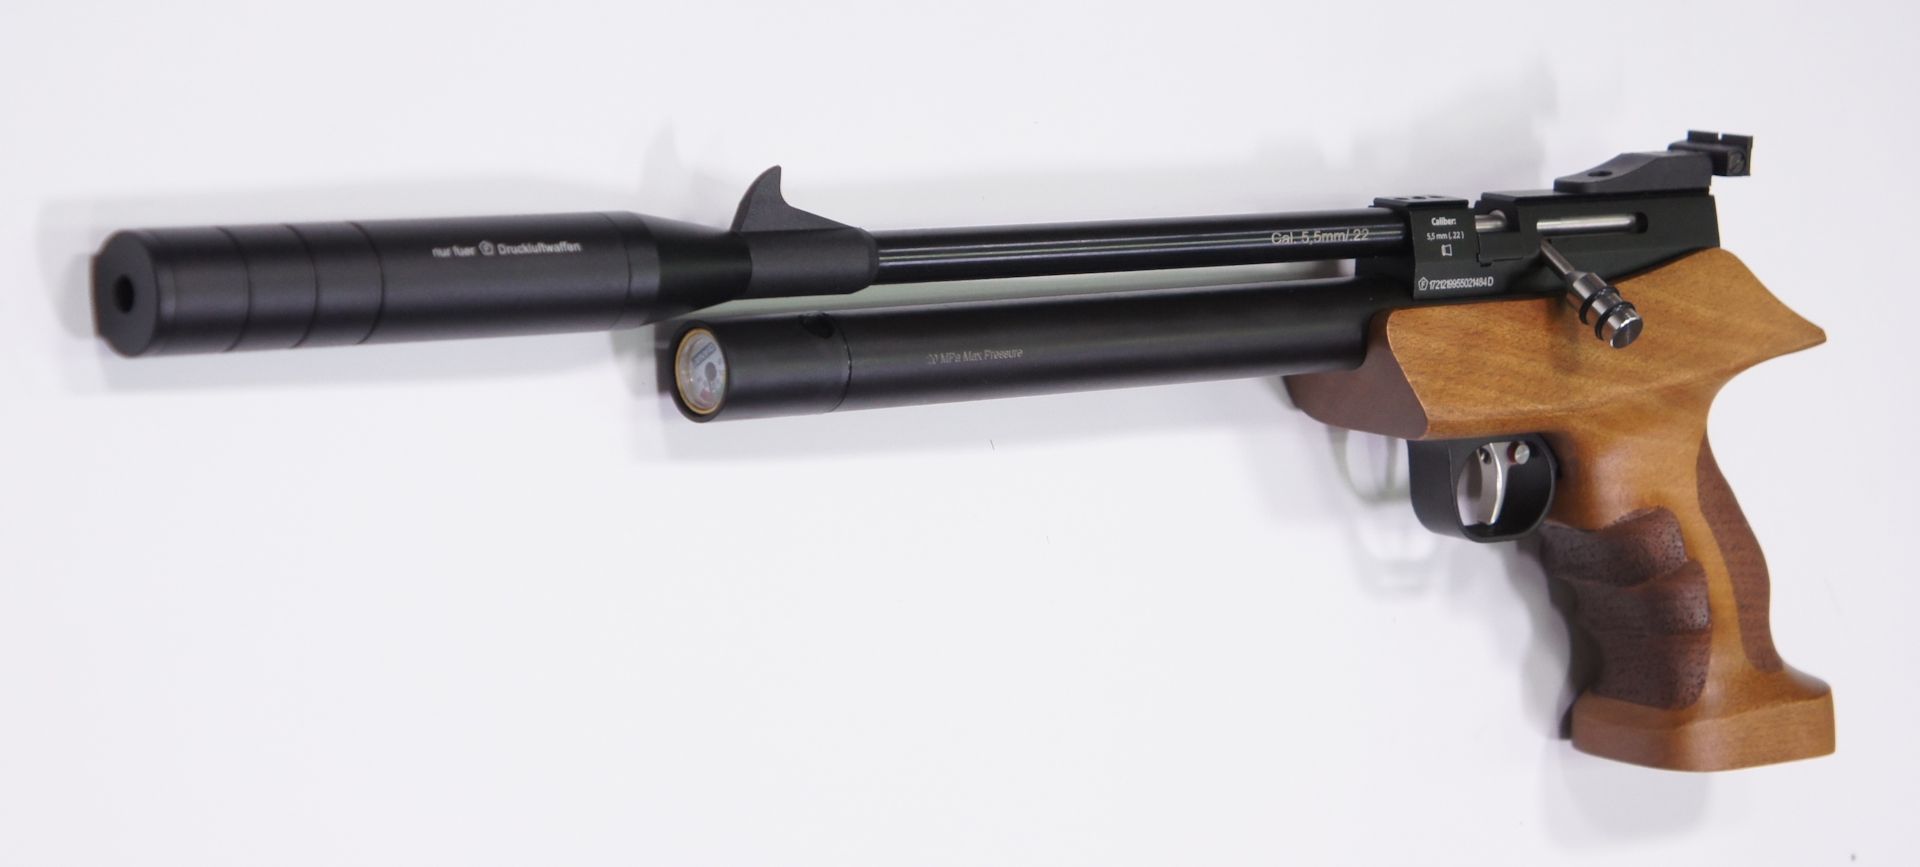 Repetier- Luftpistole Diana Bandit im Kaliber 5,5mm